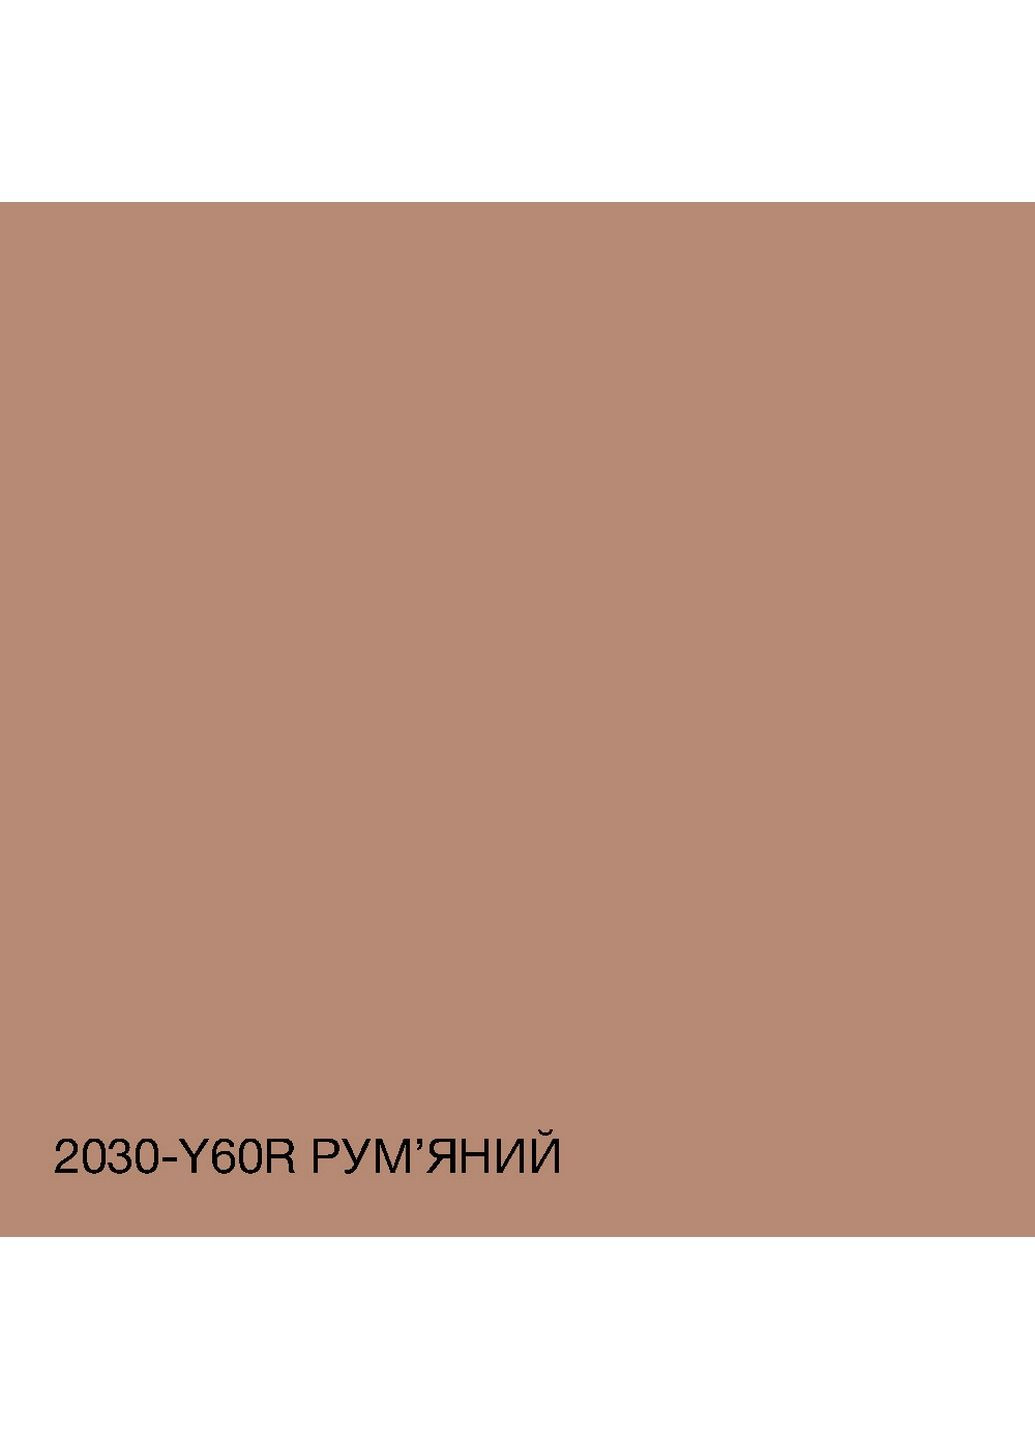 Фасадна фарба акрил-латексна 2030-Y60R 5 л SkyLine (289463445)